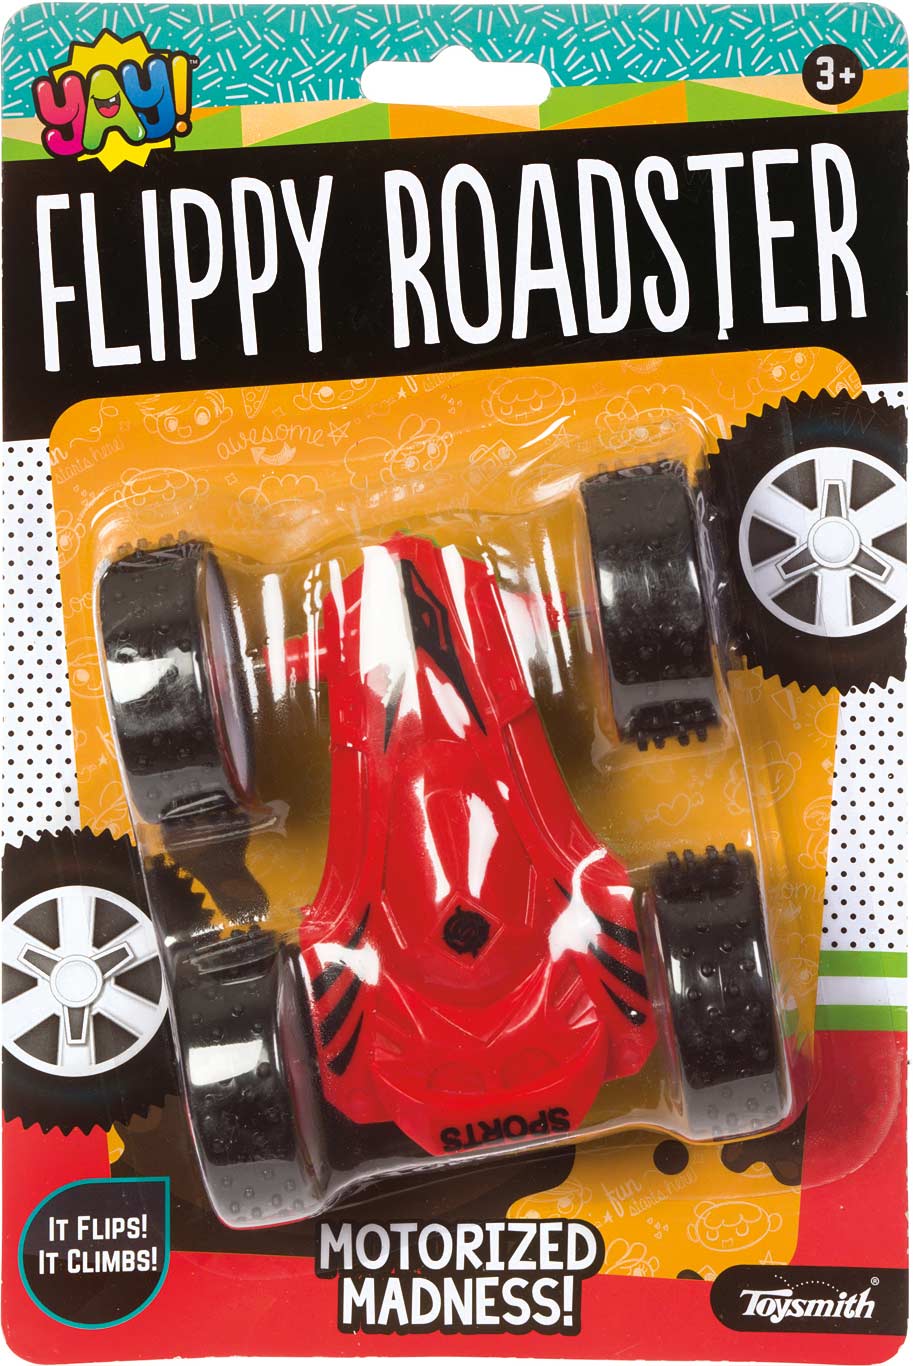 Floppy Roadstee